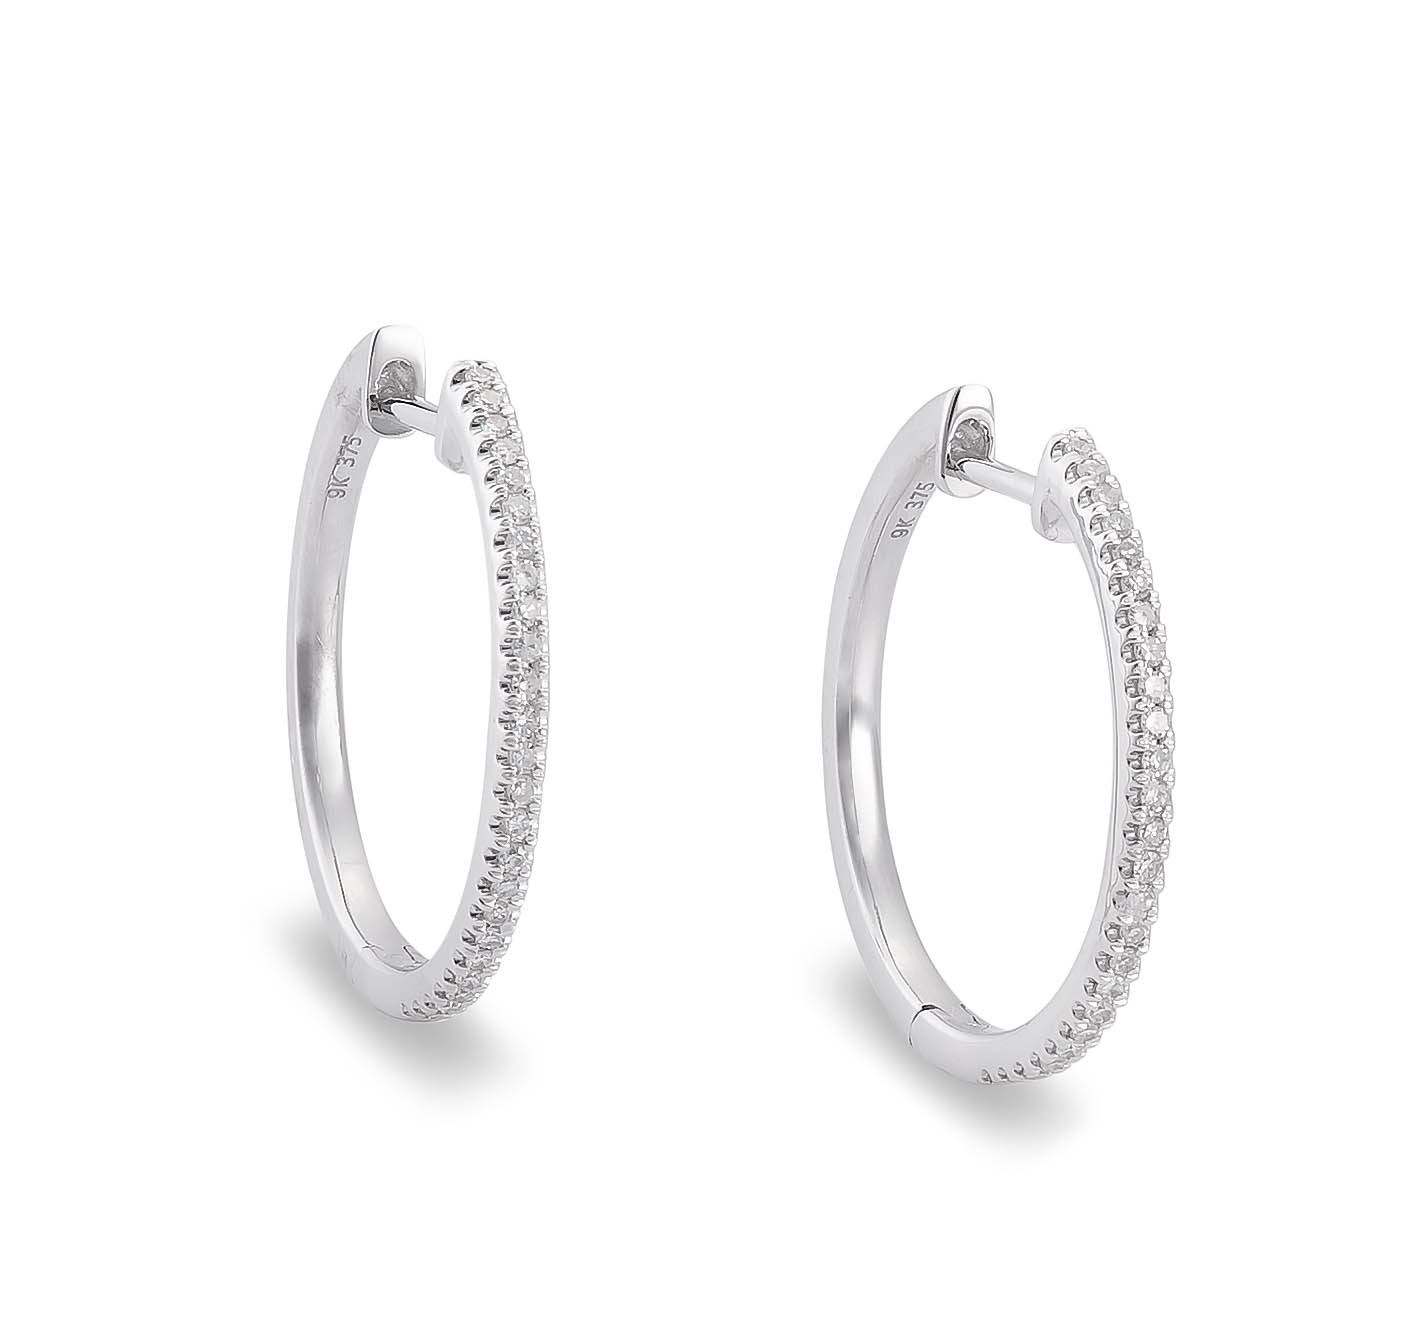 Pair of diamond and 9ct white gold half-hoop earrings